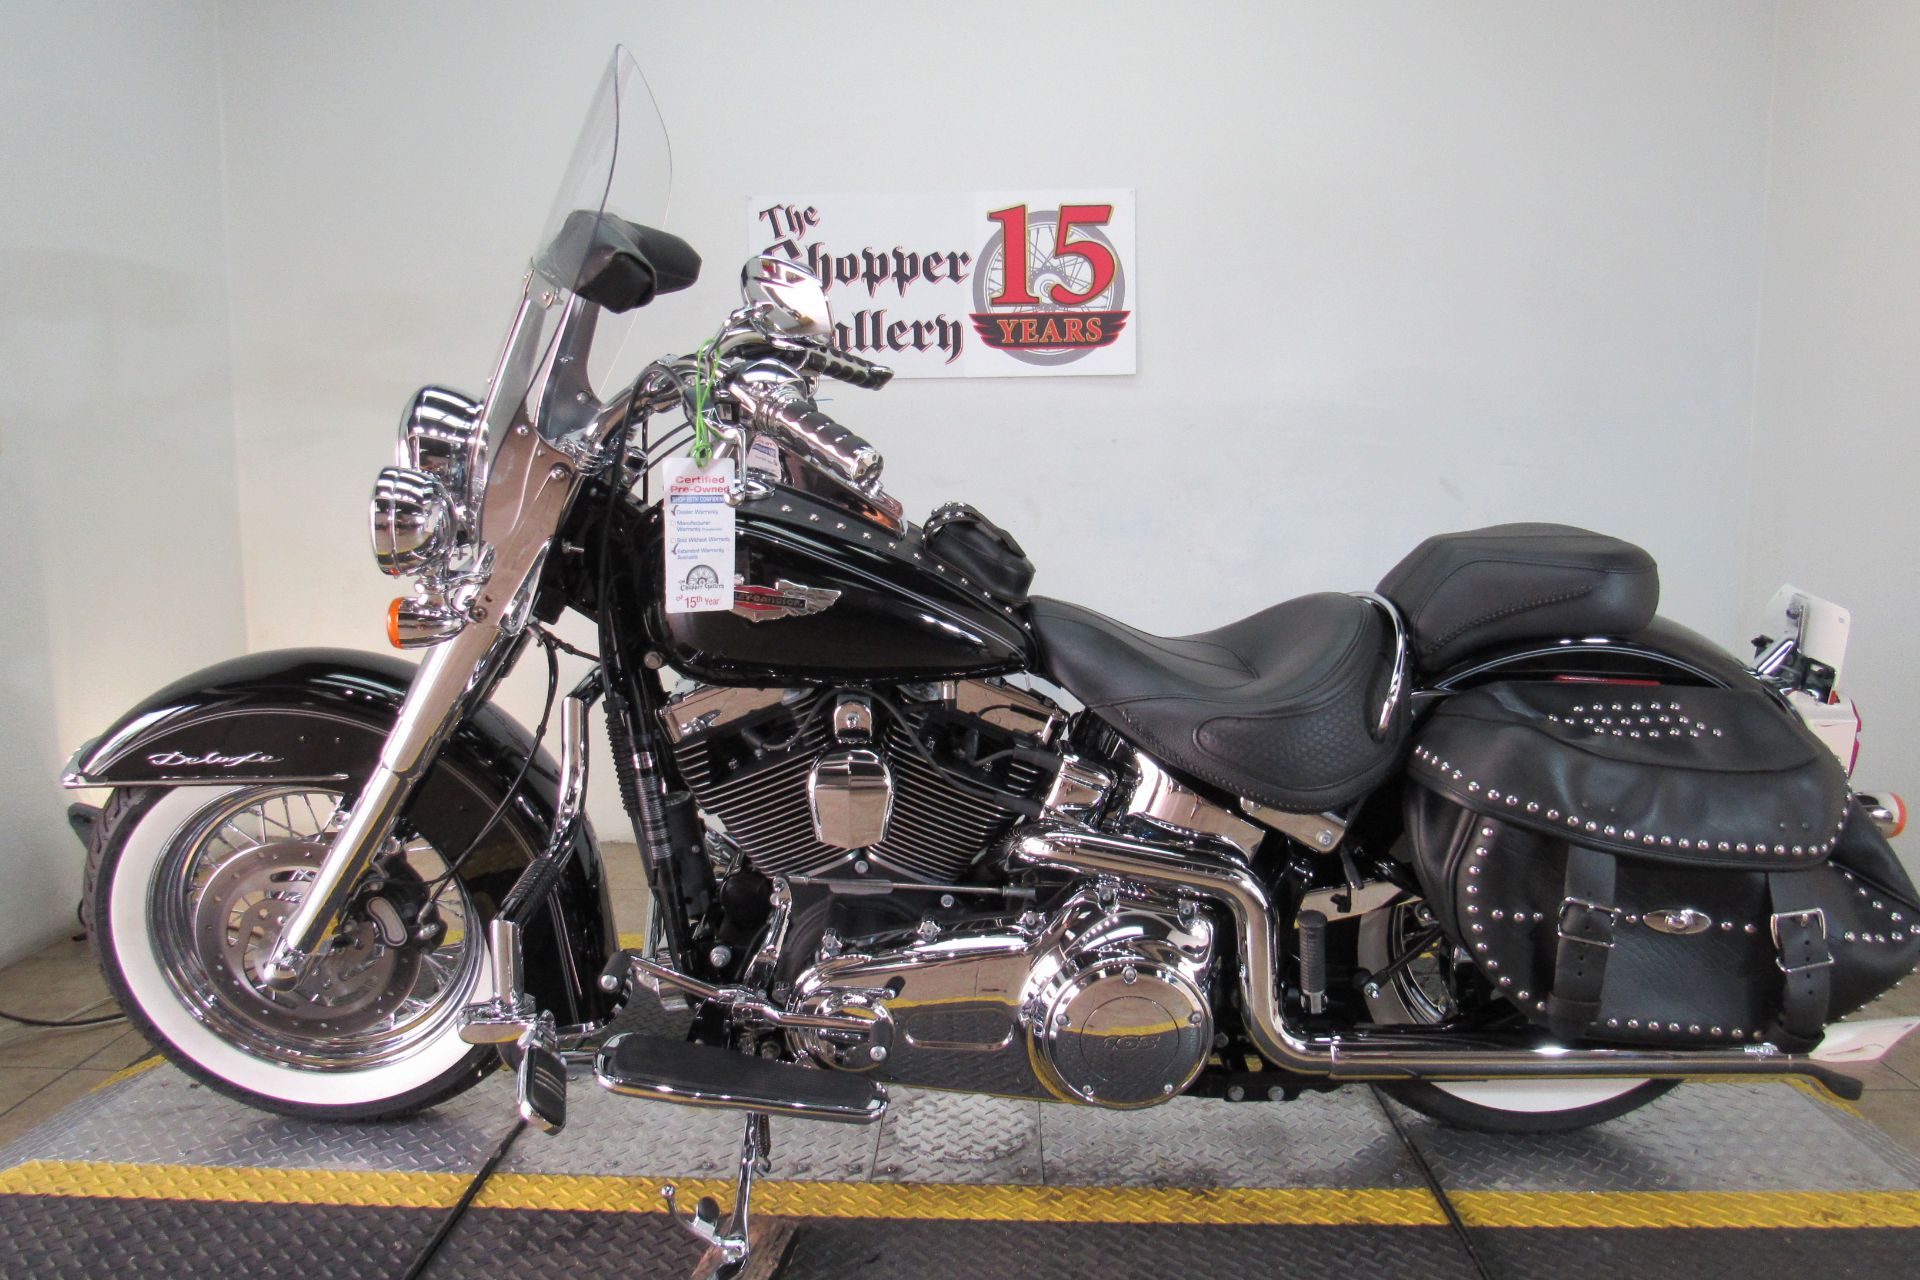 2014 Harley-Davidson Softail® Deluxe in Temecula, California - Photo 21